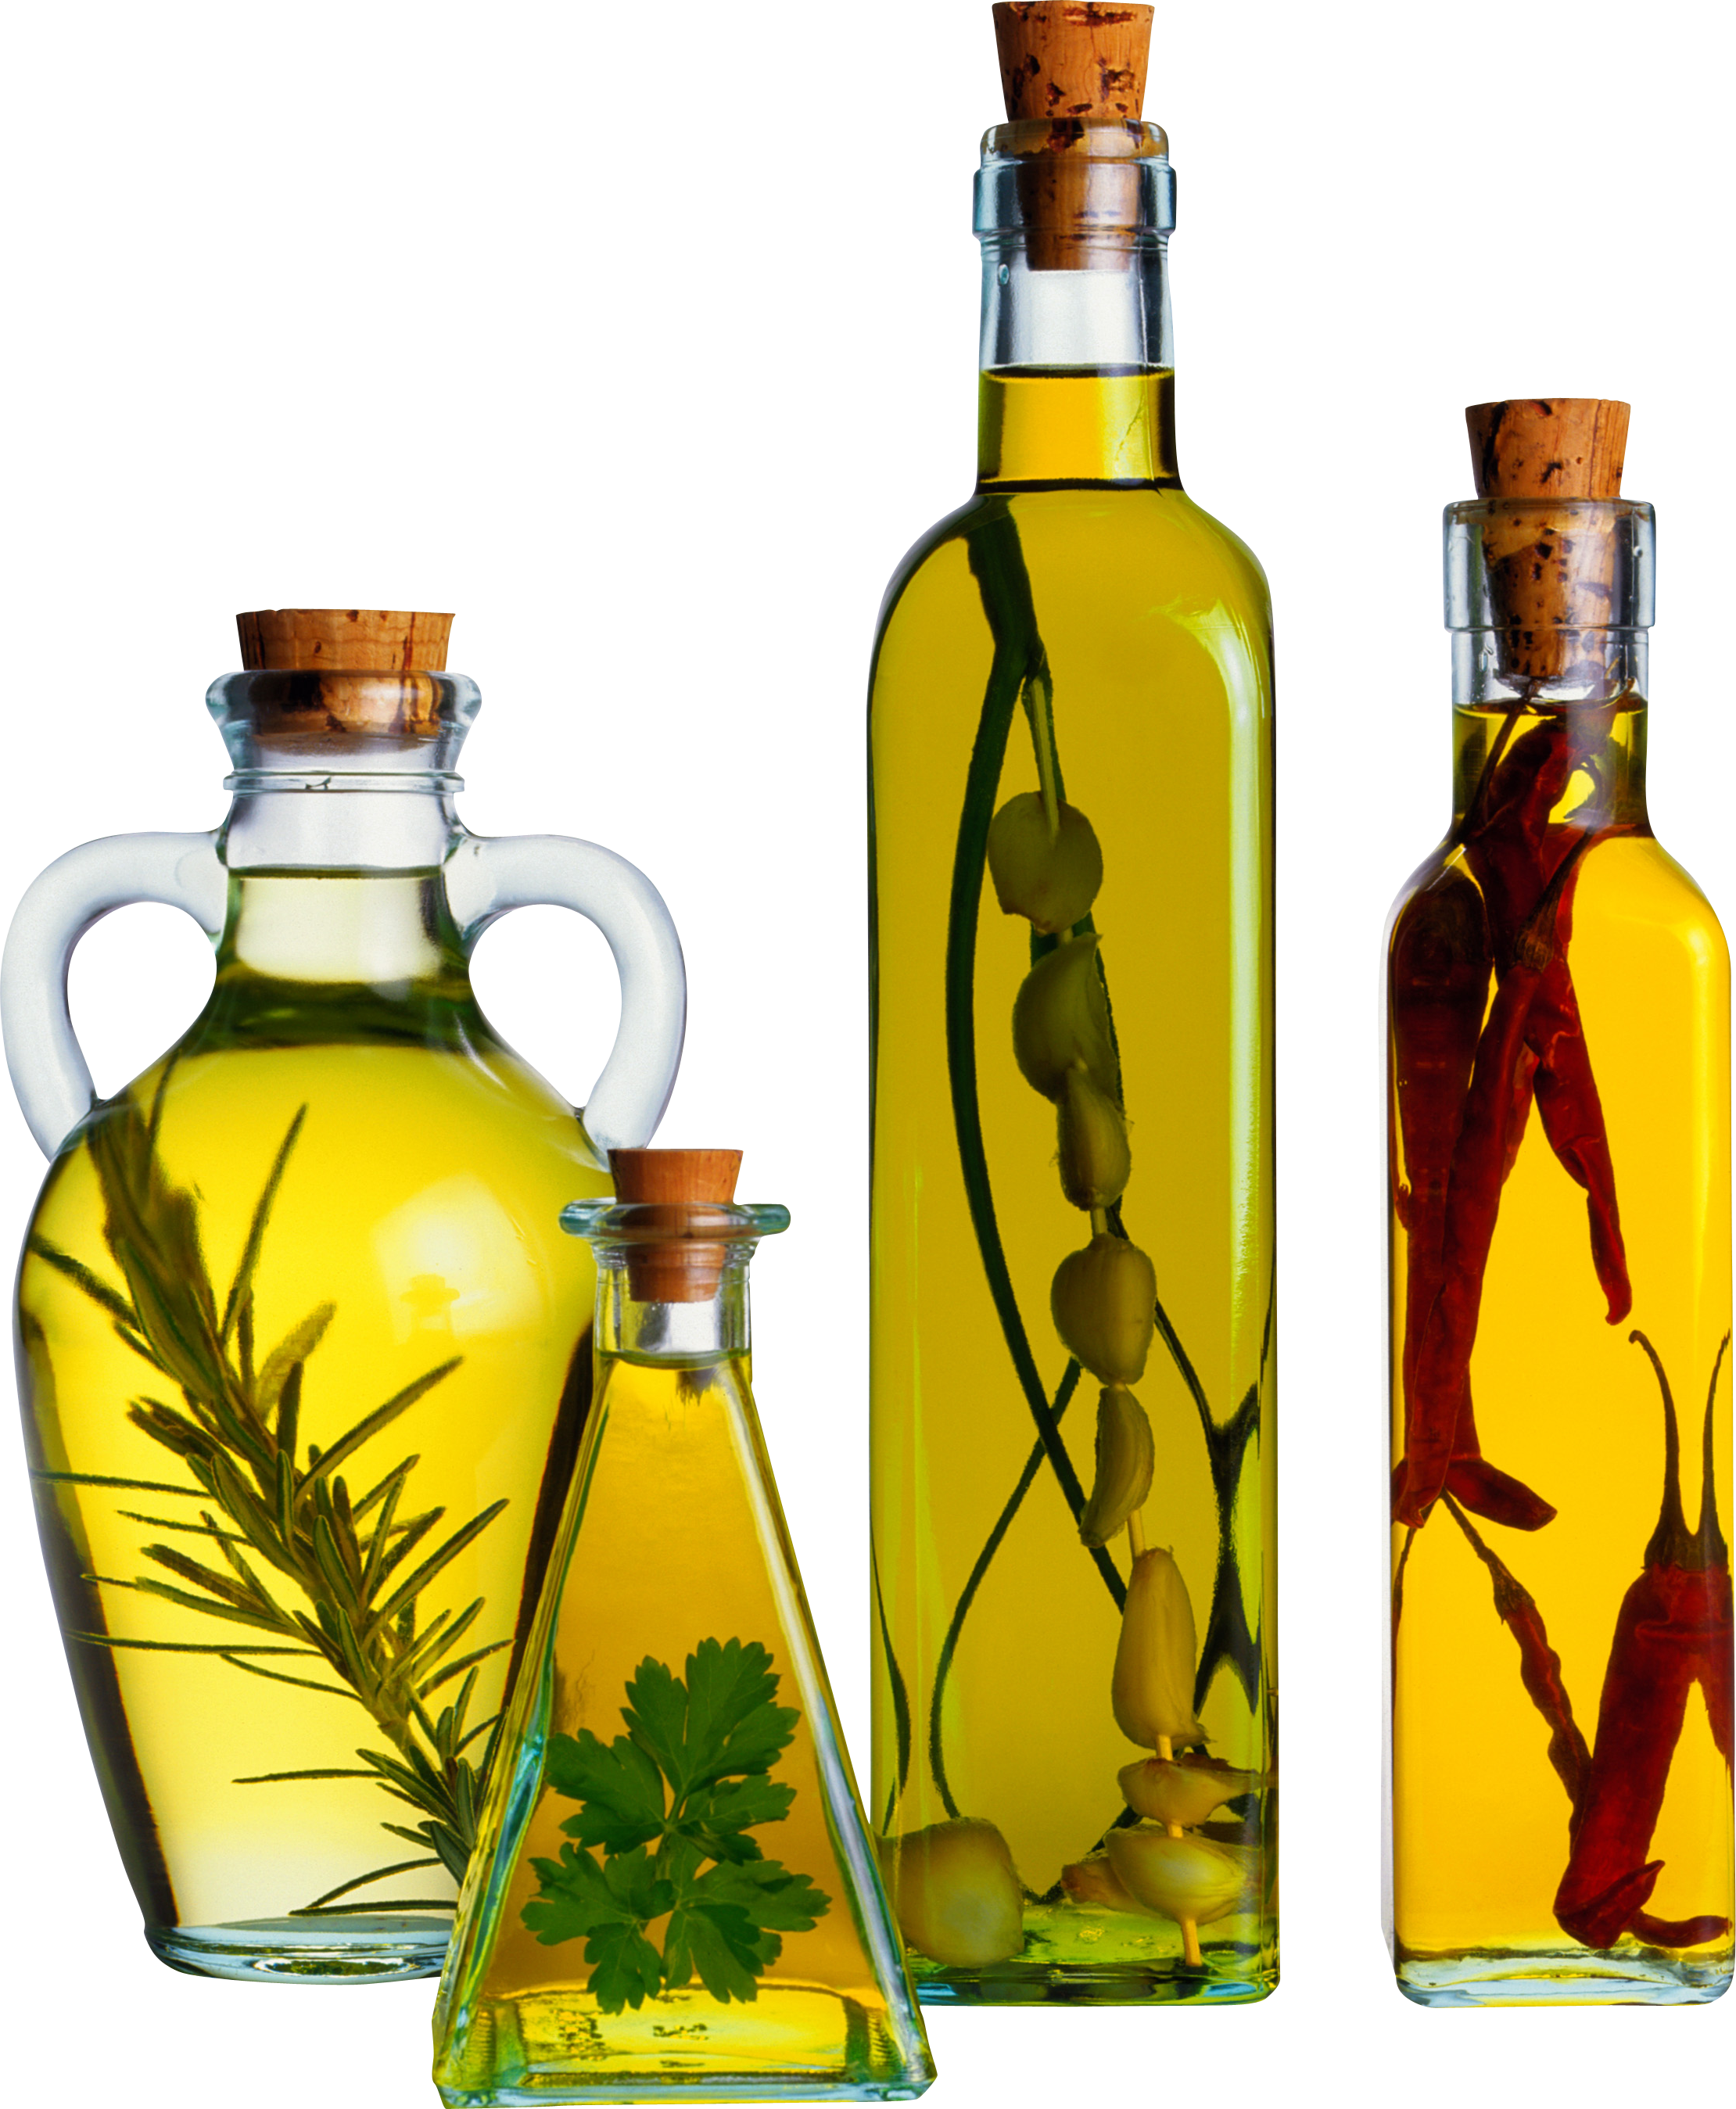 Olive oil PNG